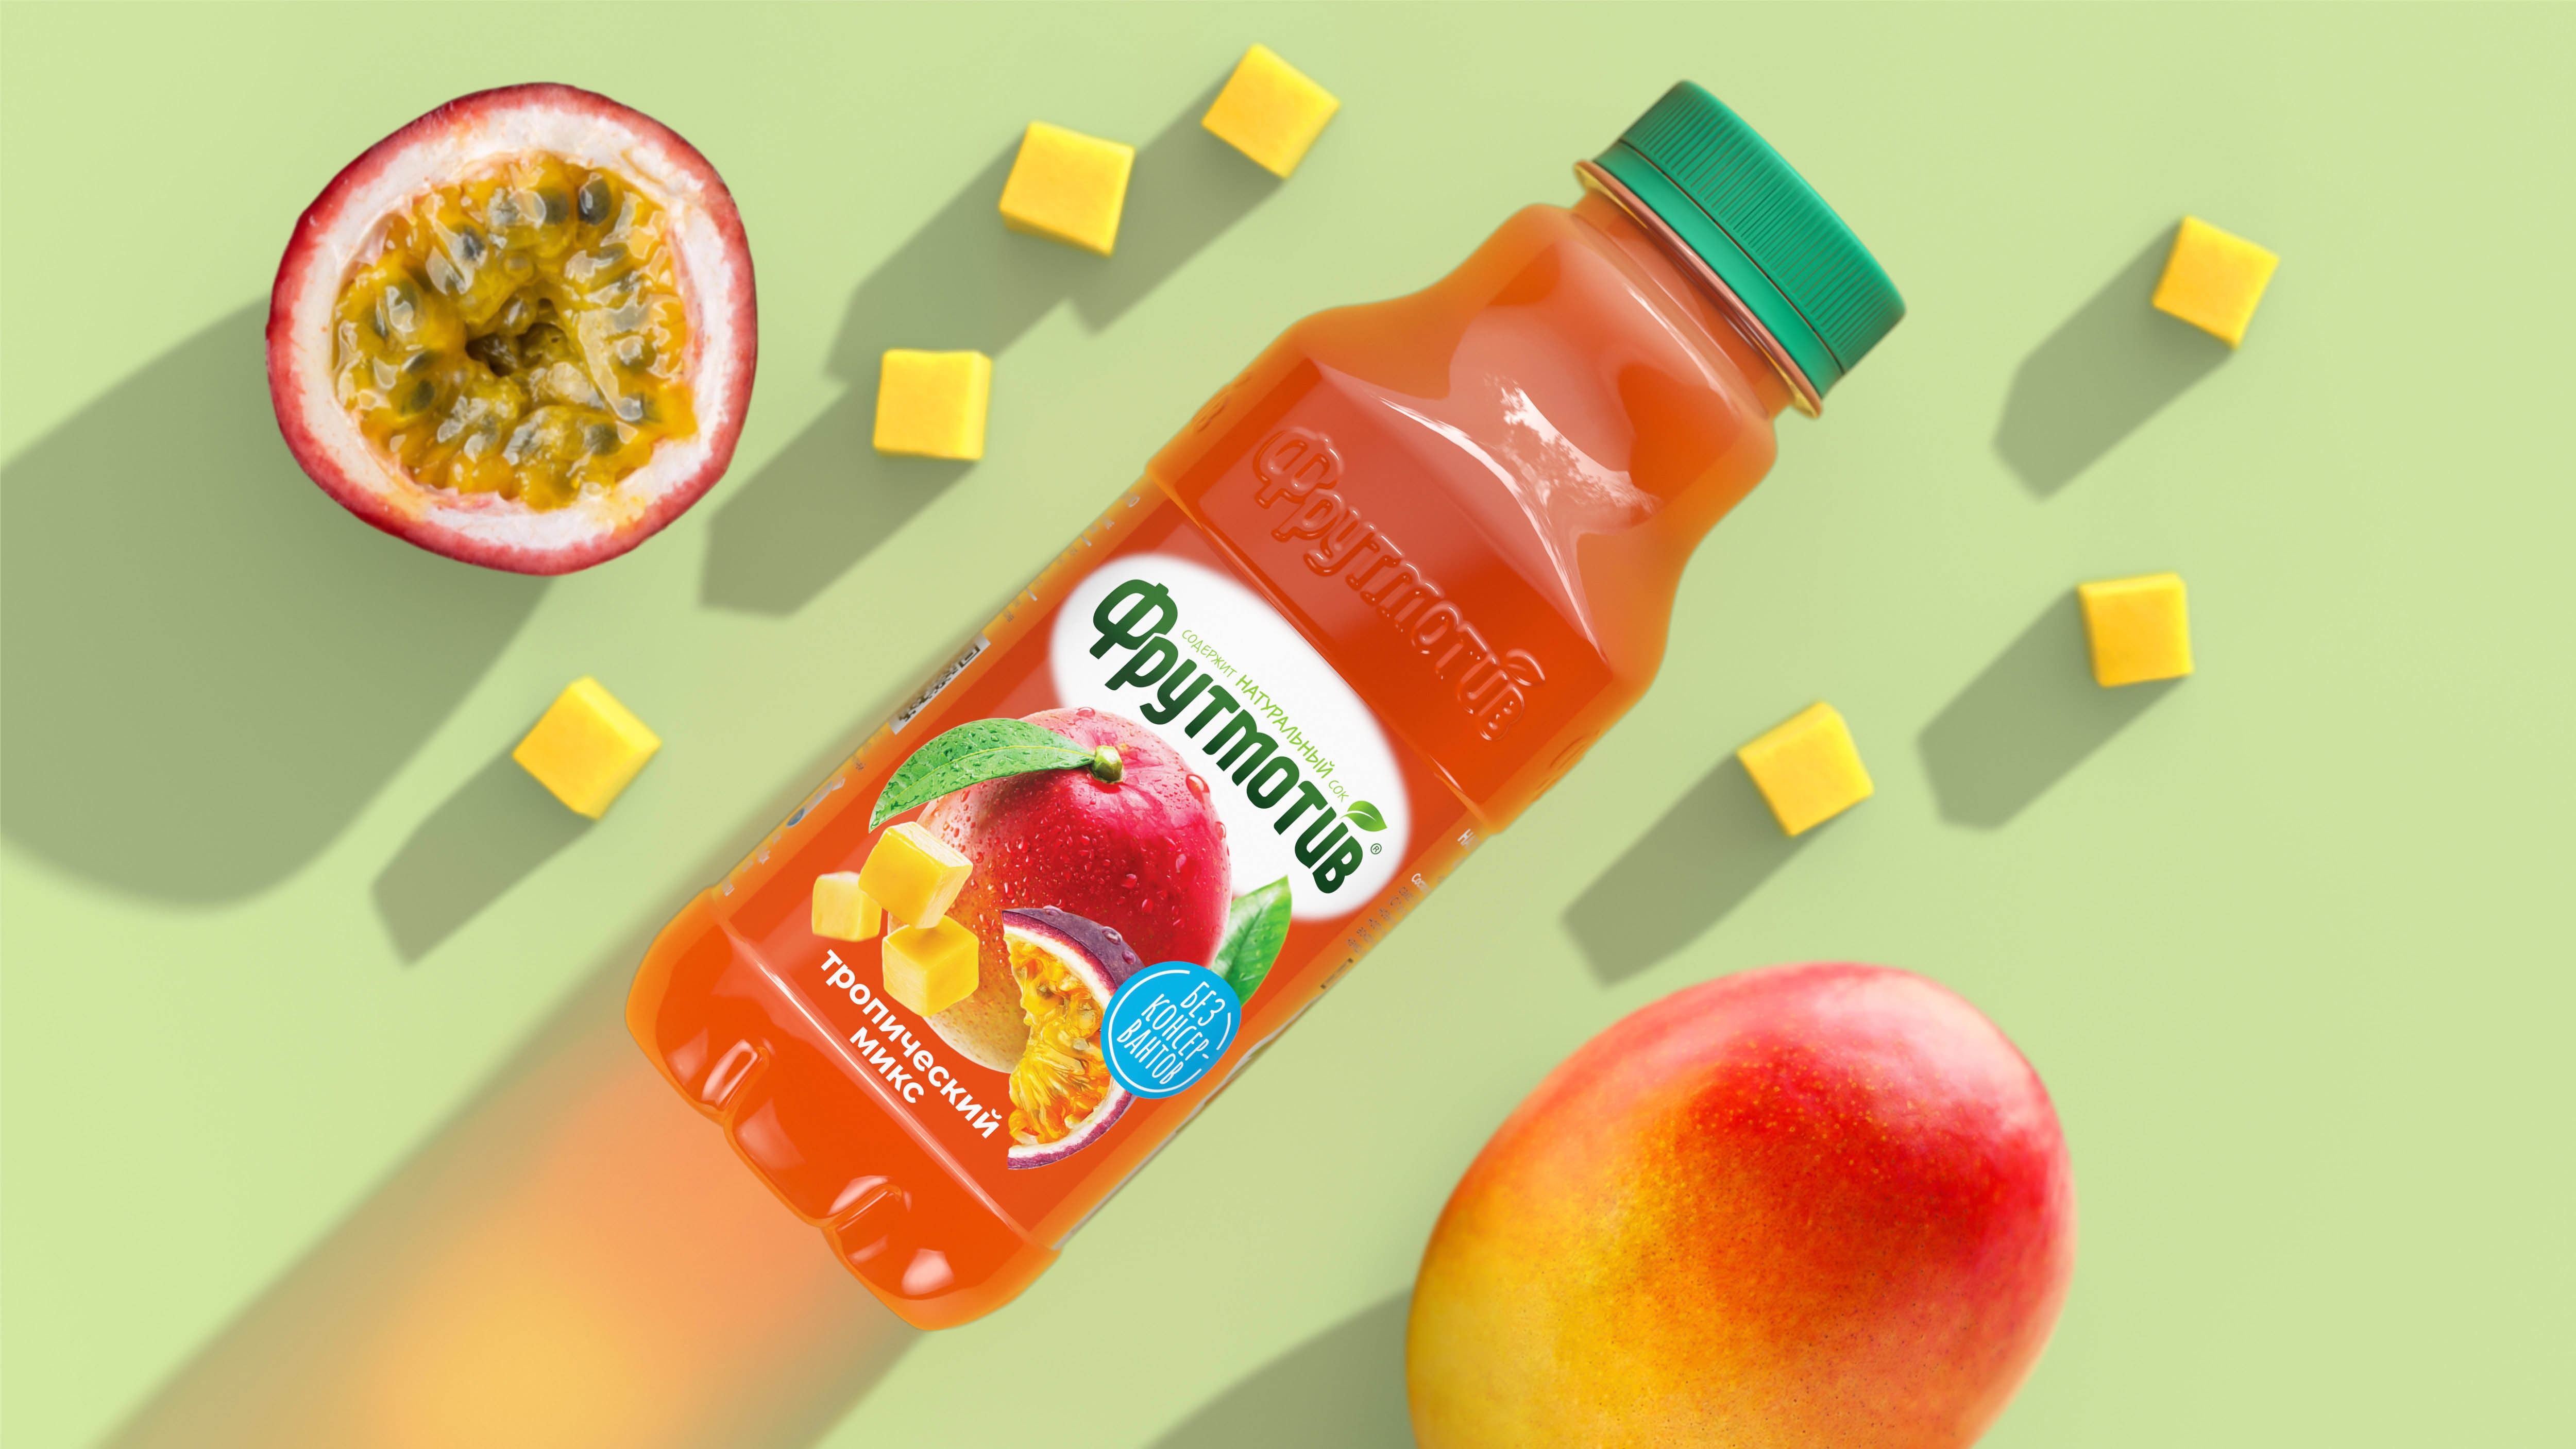 Frutmotiv果汁饮料包装设计